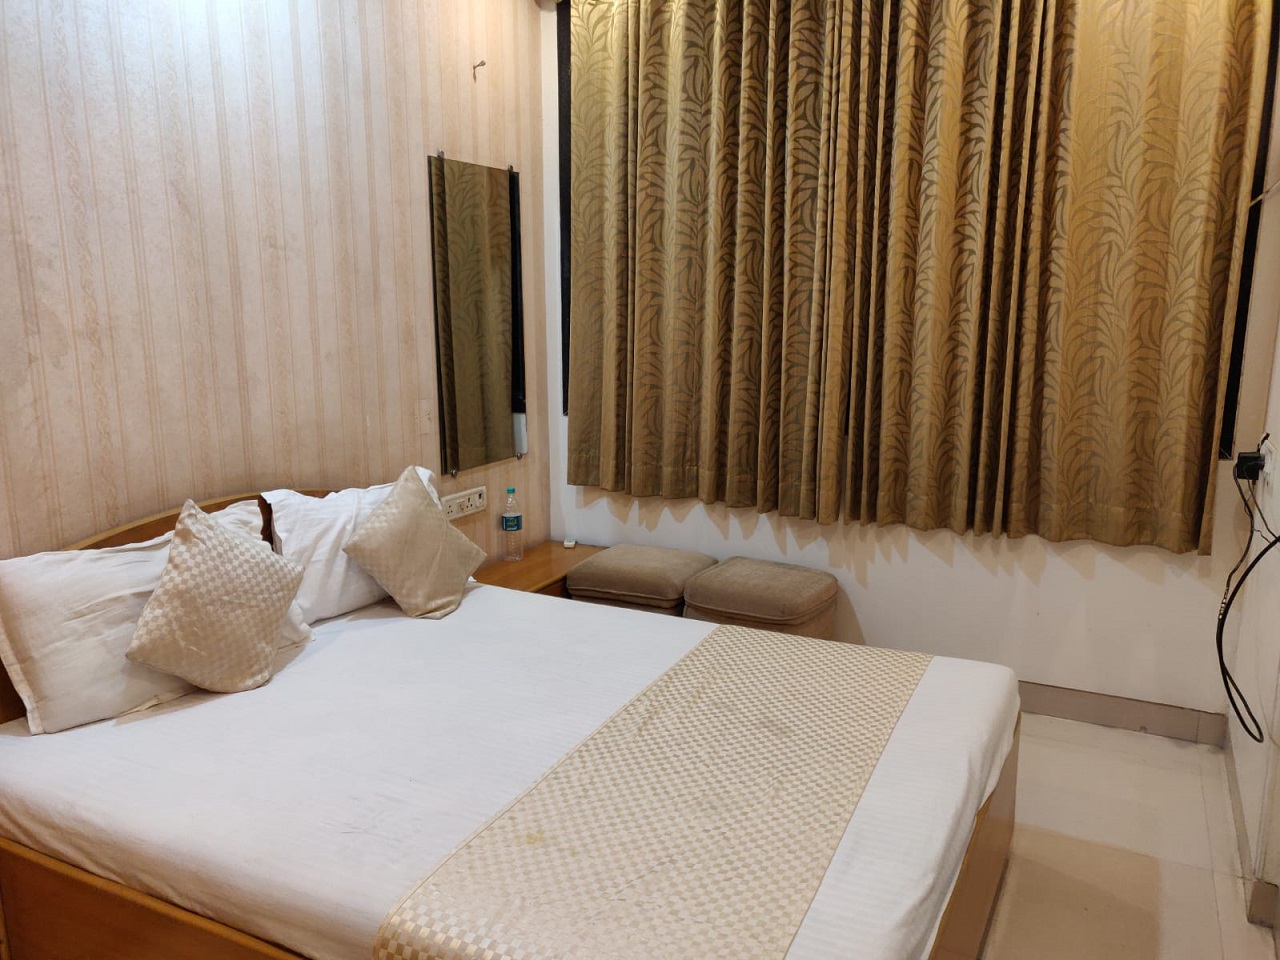 Deluxe-Airconditioned-Room-7-sun-service-apartment-kandivali-east-mumbai